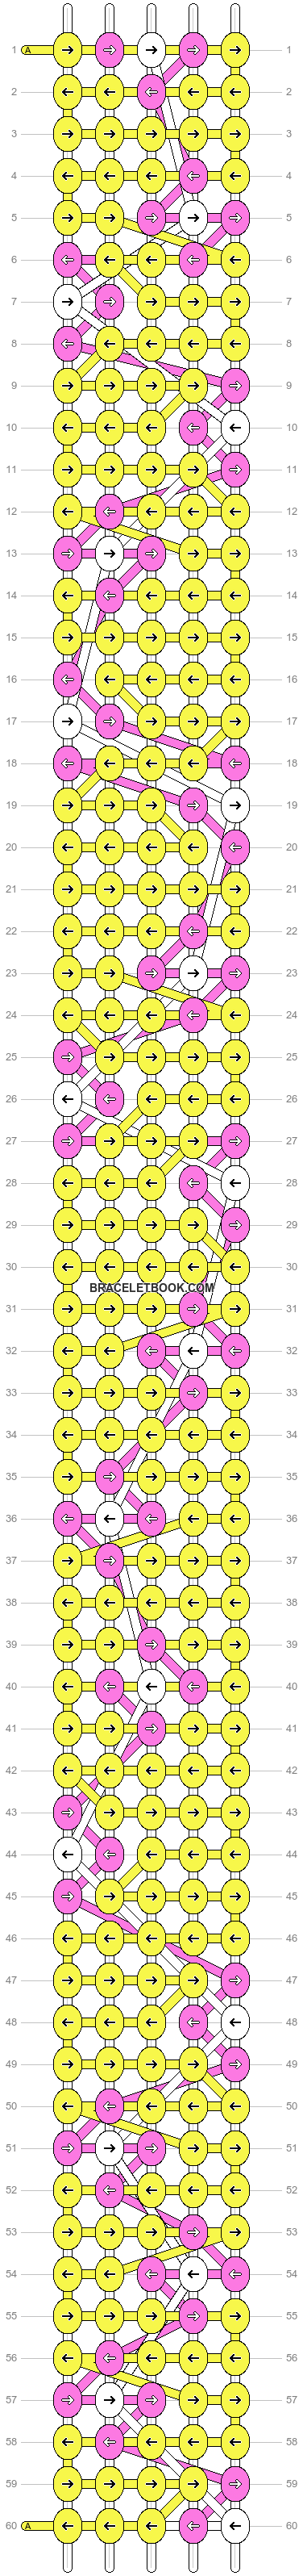 Alpha pattern #38852 variation #49635 pattern